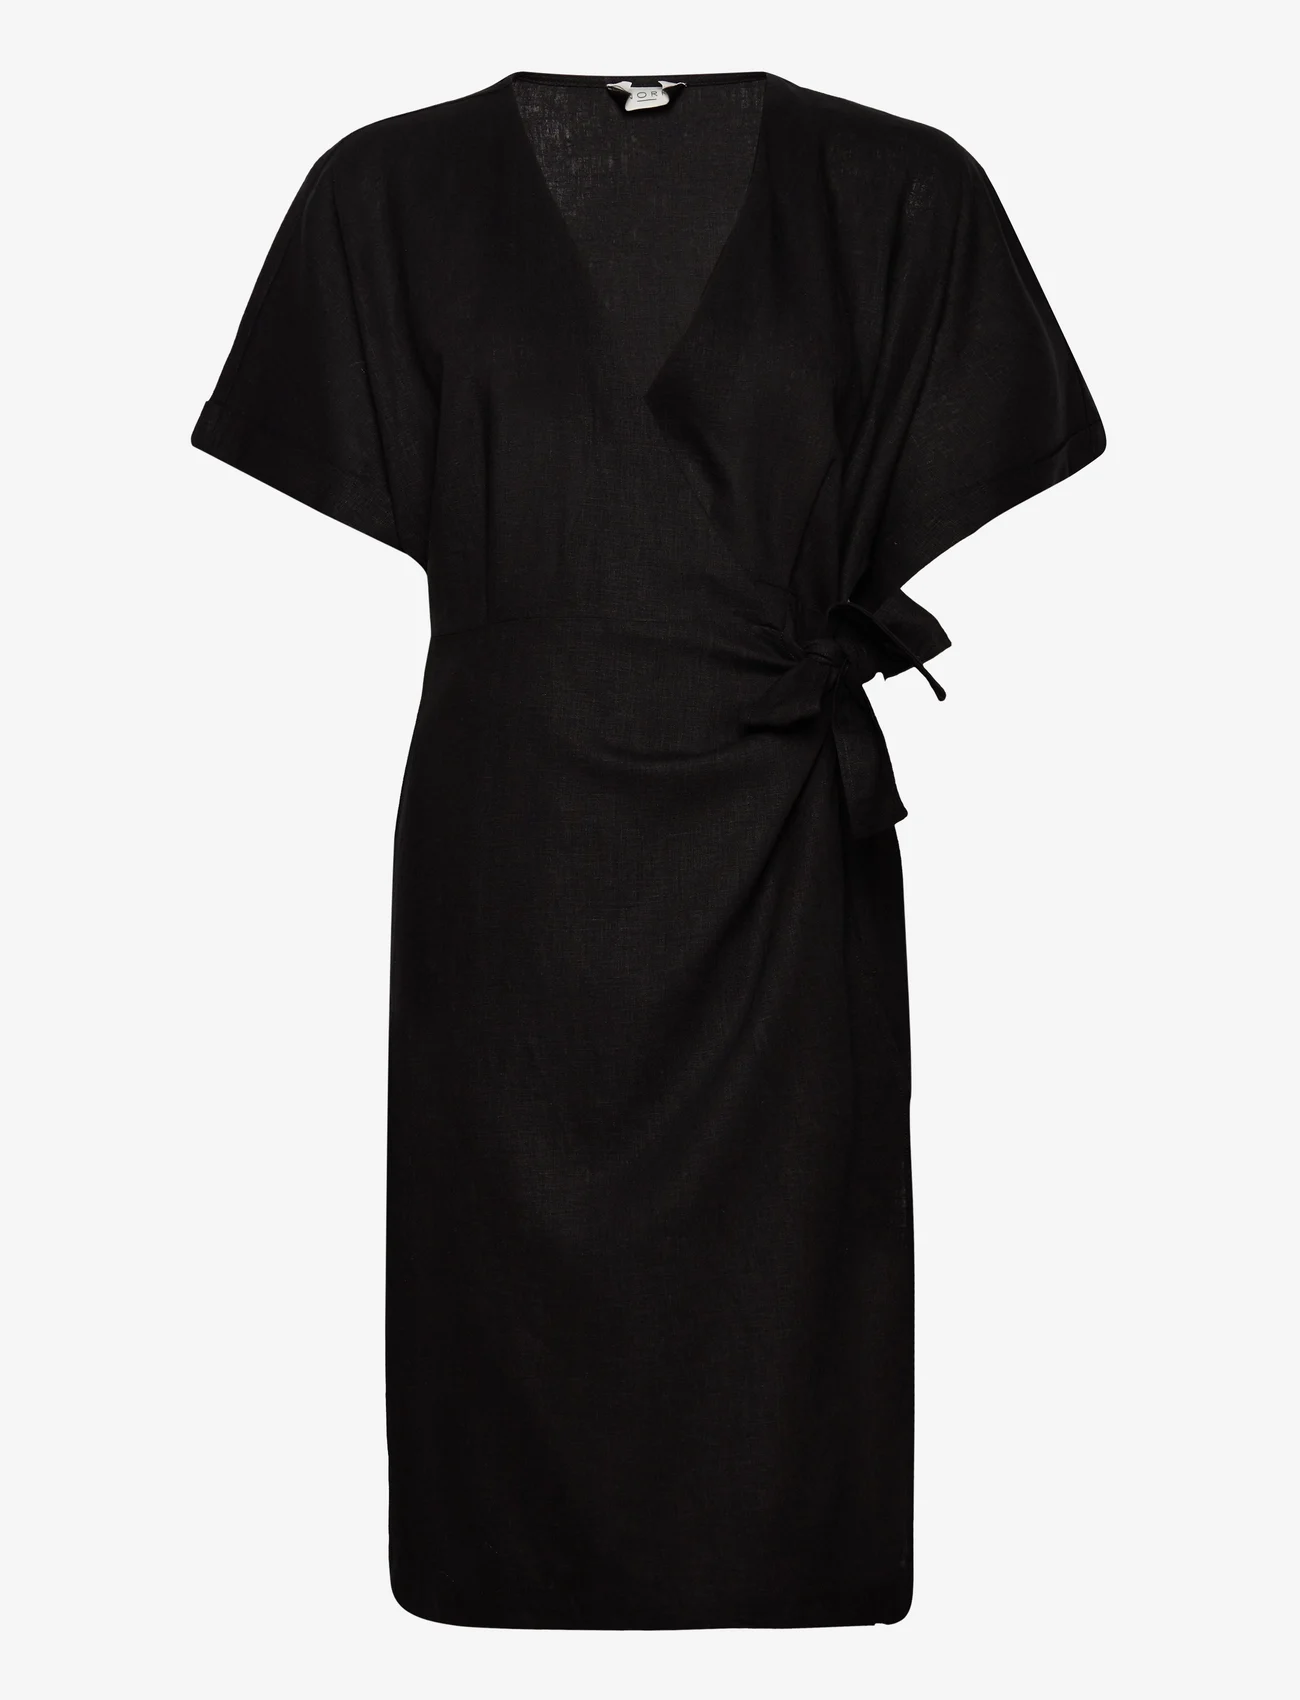 NORR - Esi wrap dress - wrap dresses - black - 0